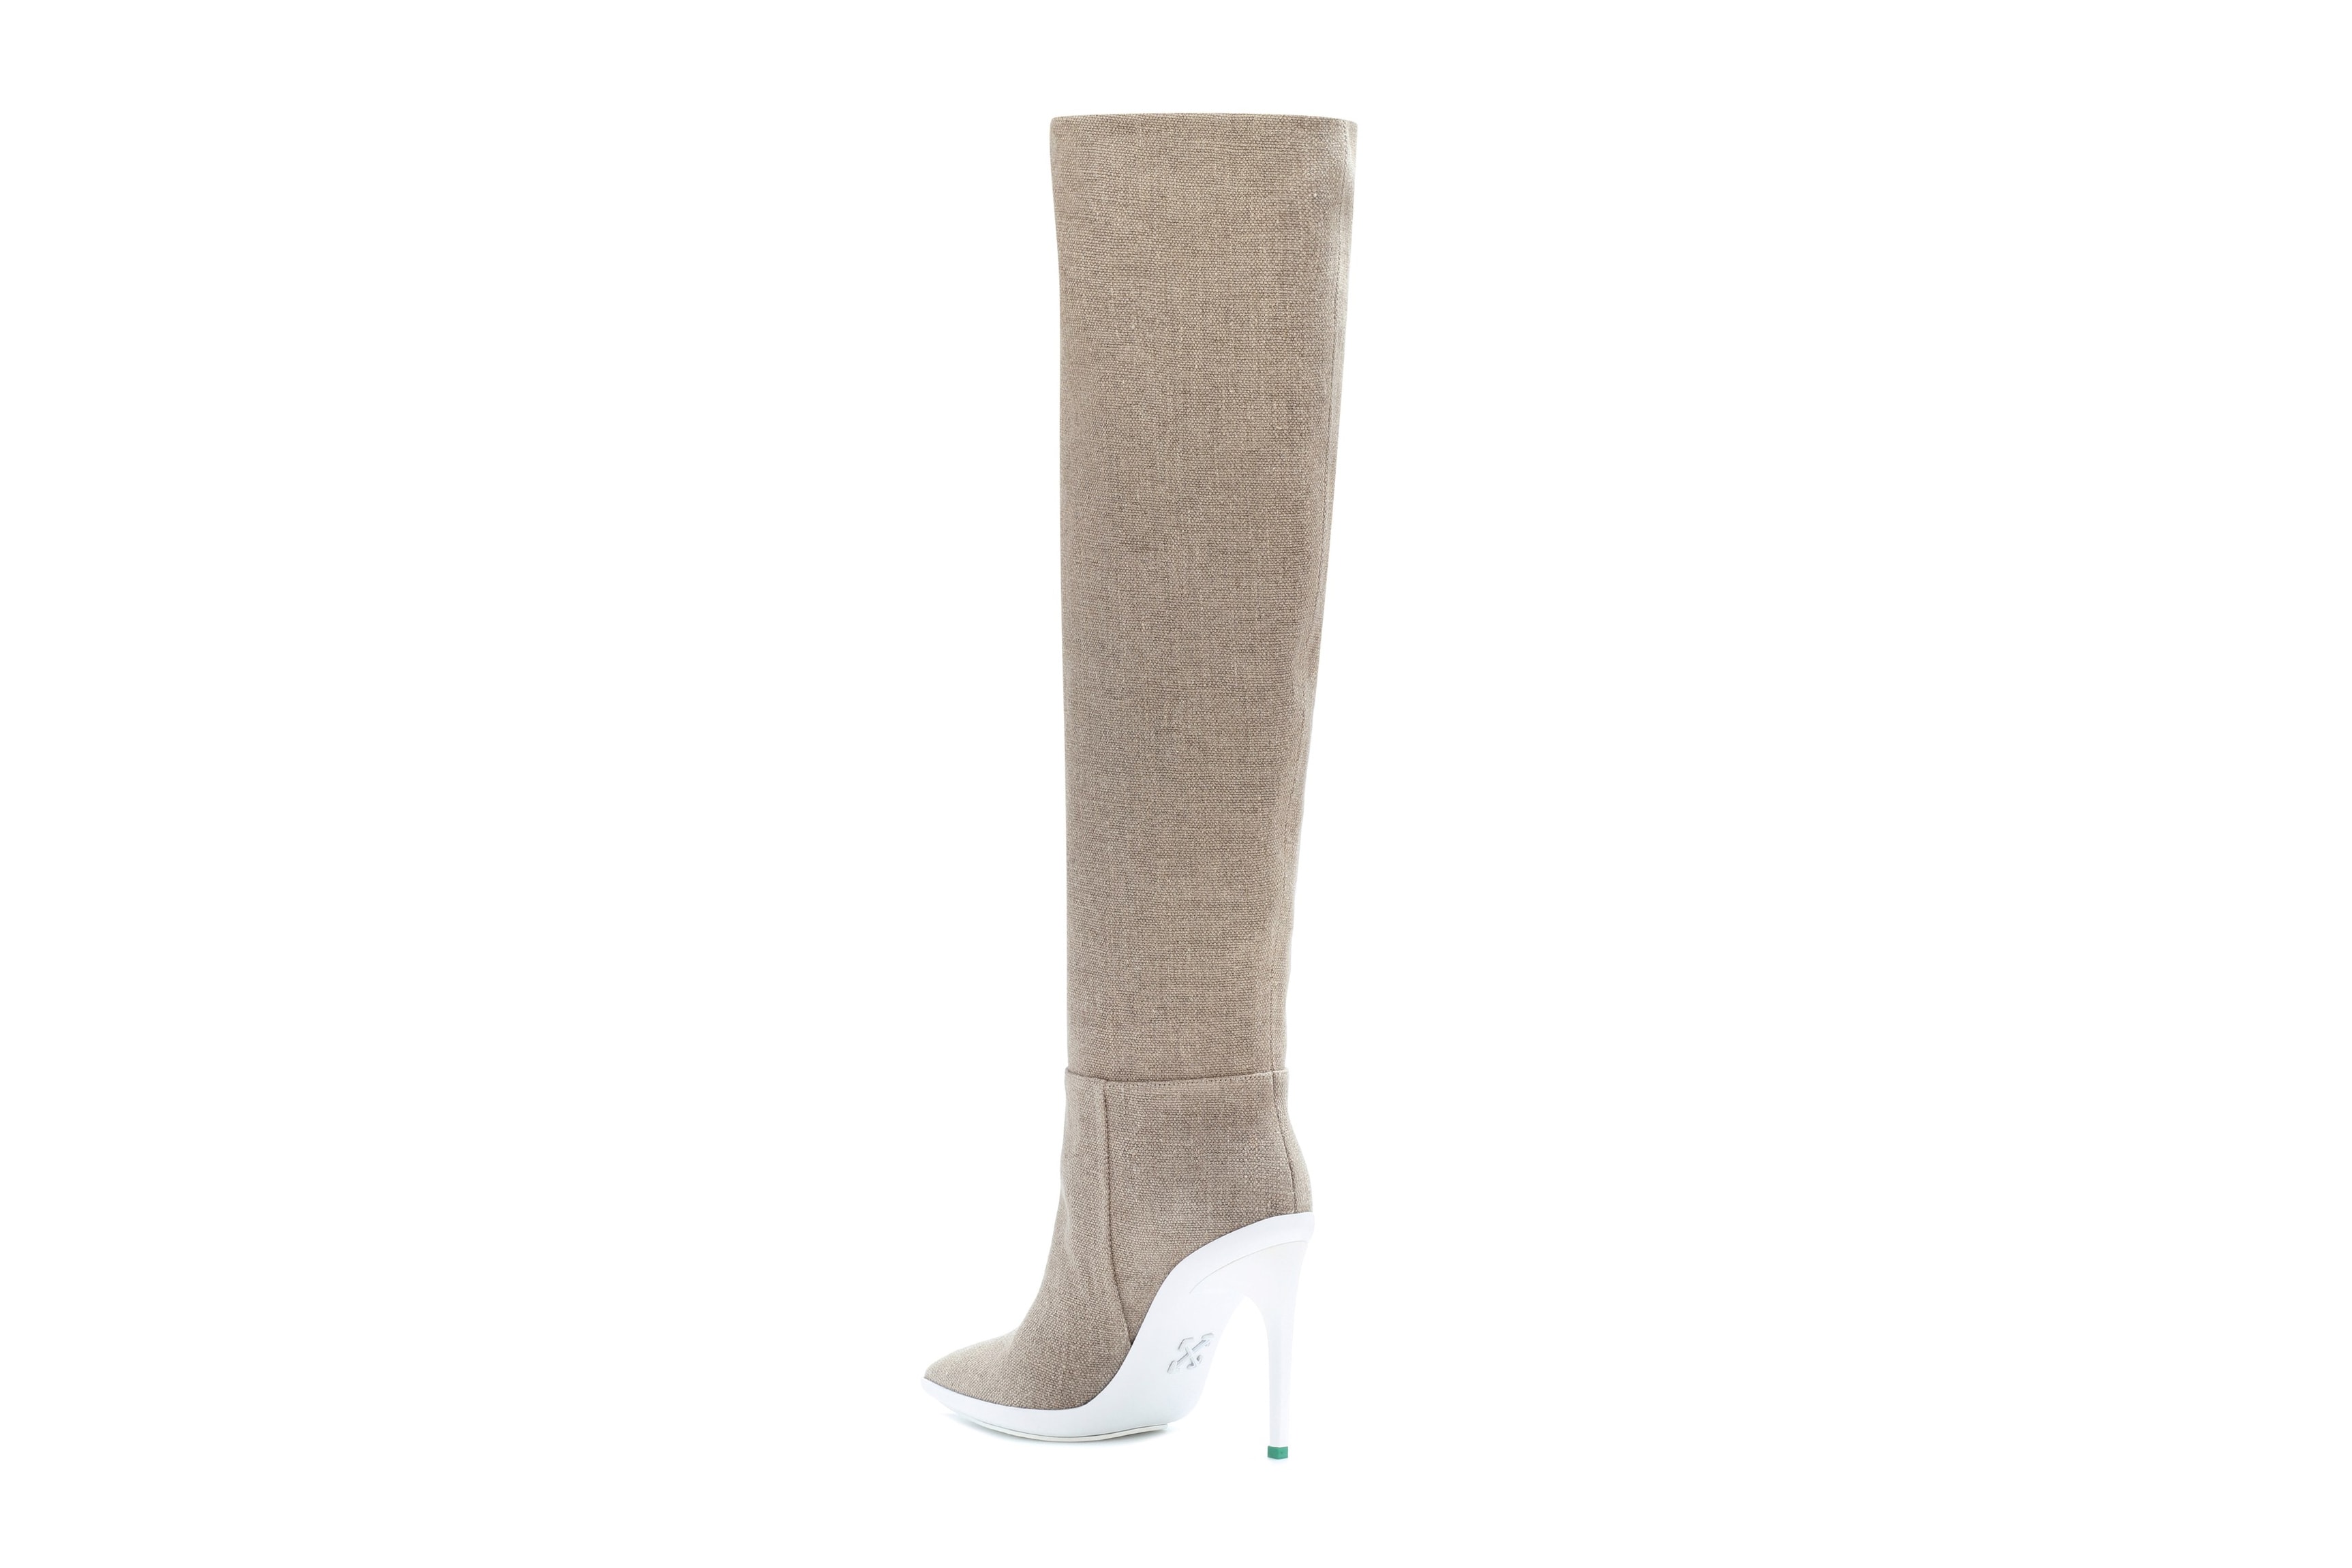 Off-White™ "FOR WALKING" Knee High Canvas Boots Virgil Abloh Heels Stilletto Pump Beige